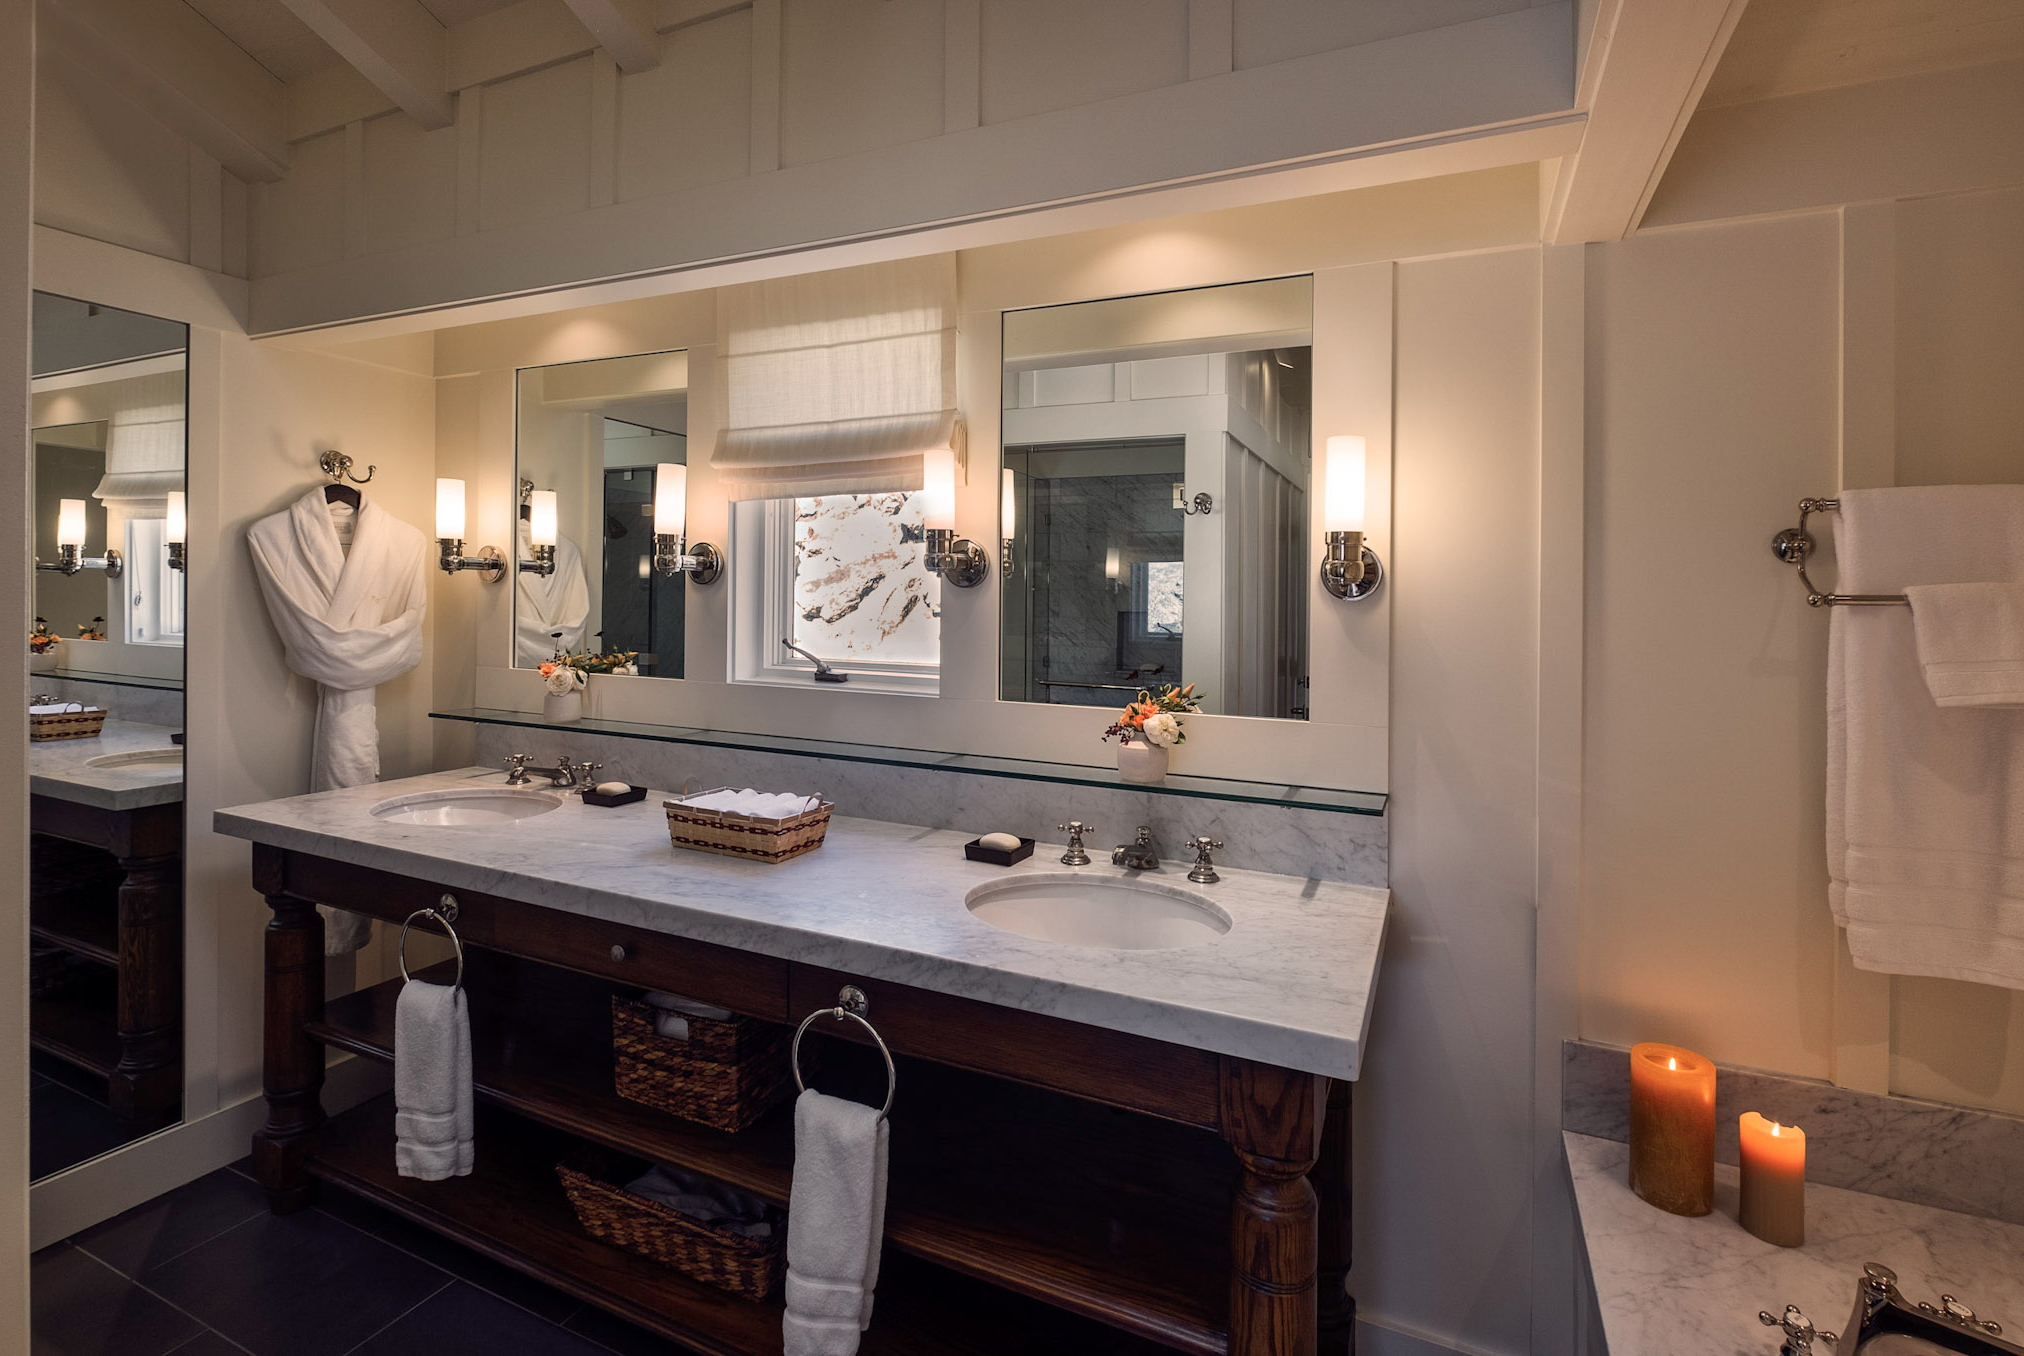 Treeline suite bathroom with dual vanities